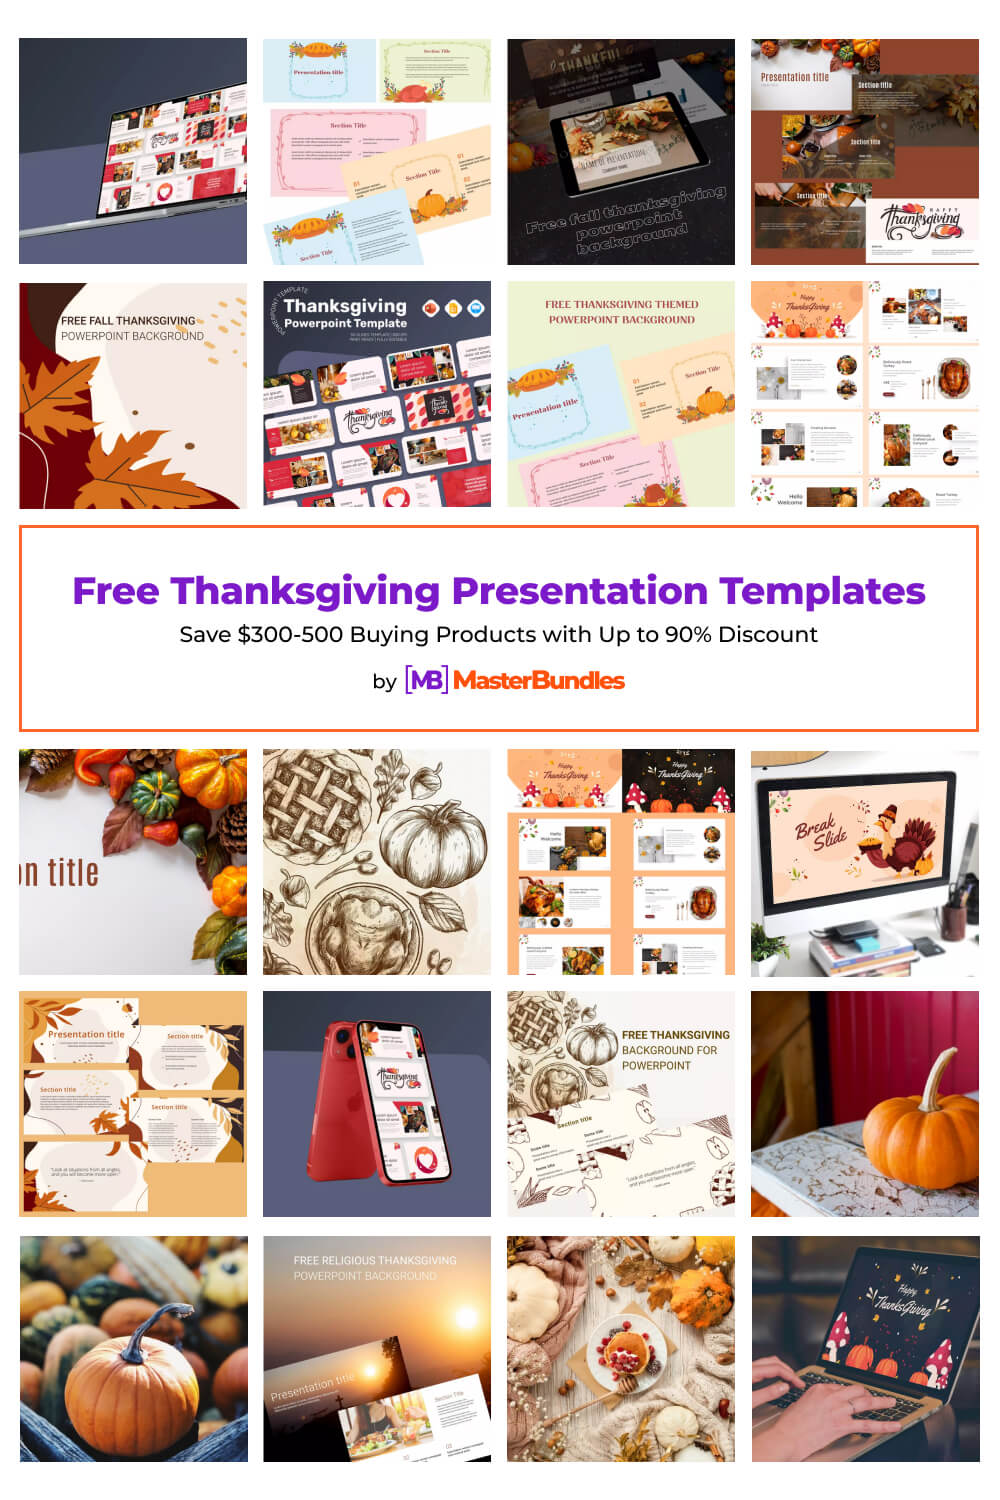 free thanksgiving presentation templates pinterest image.